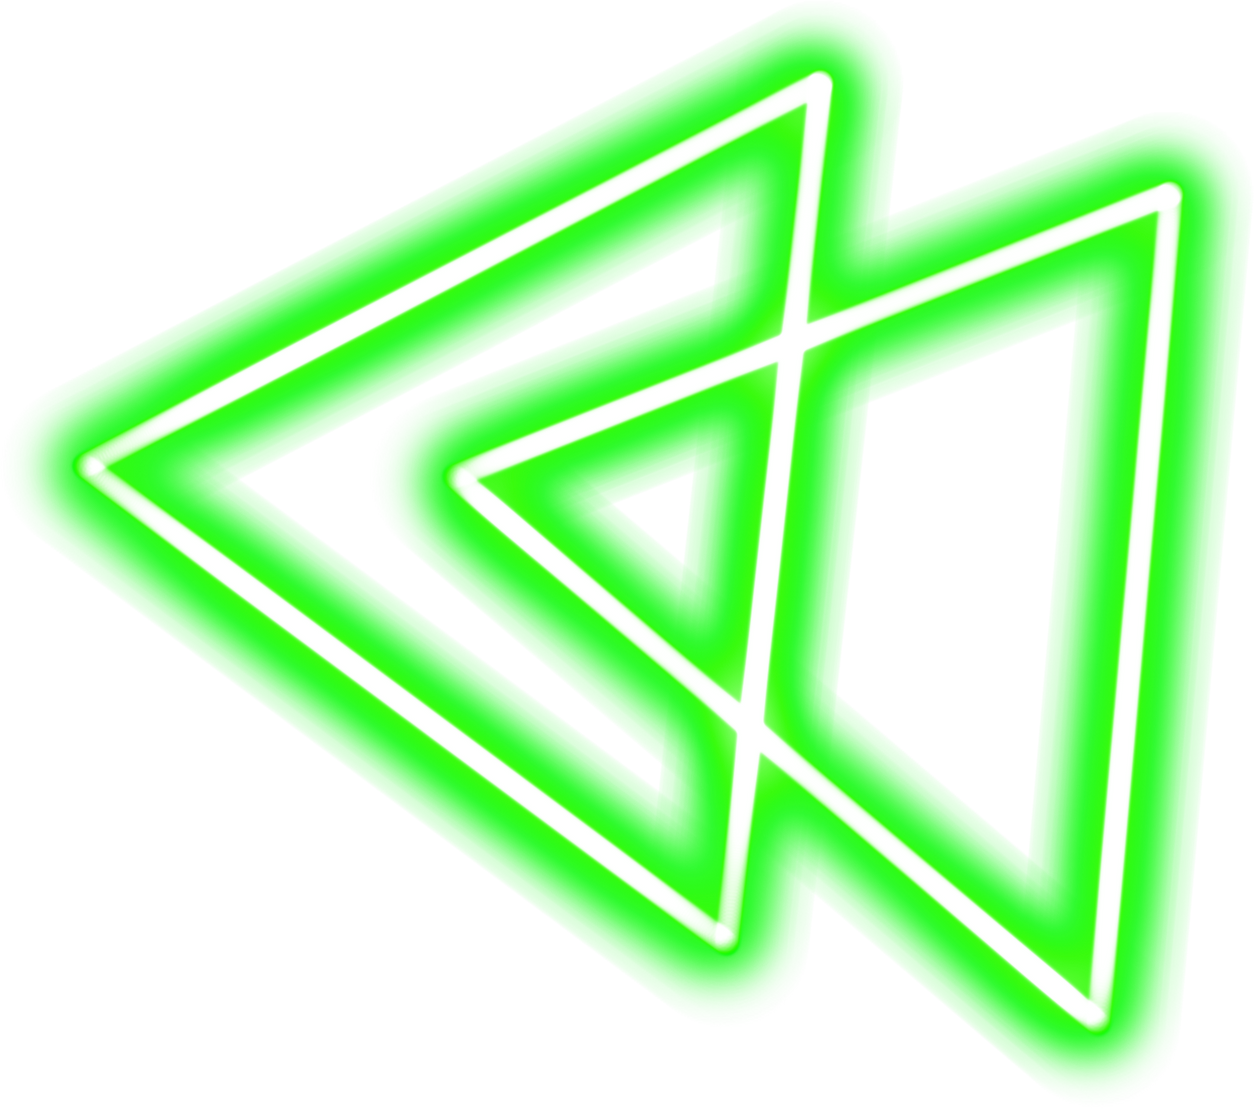 Green neon triangles